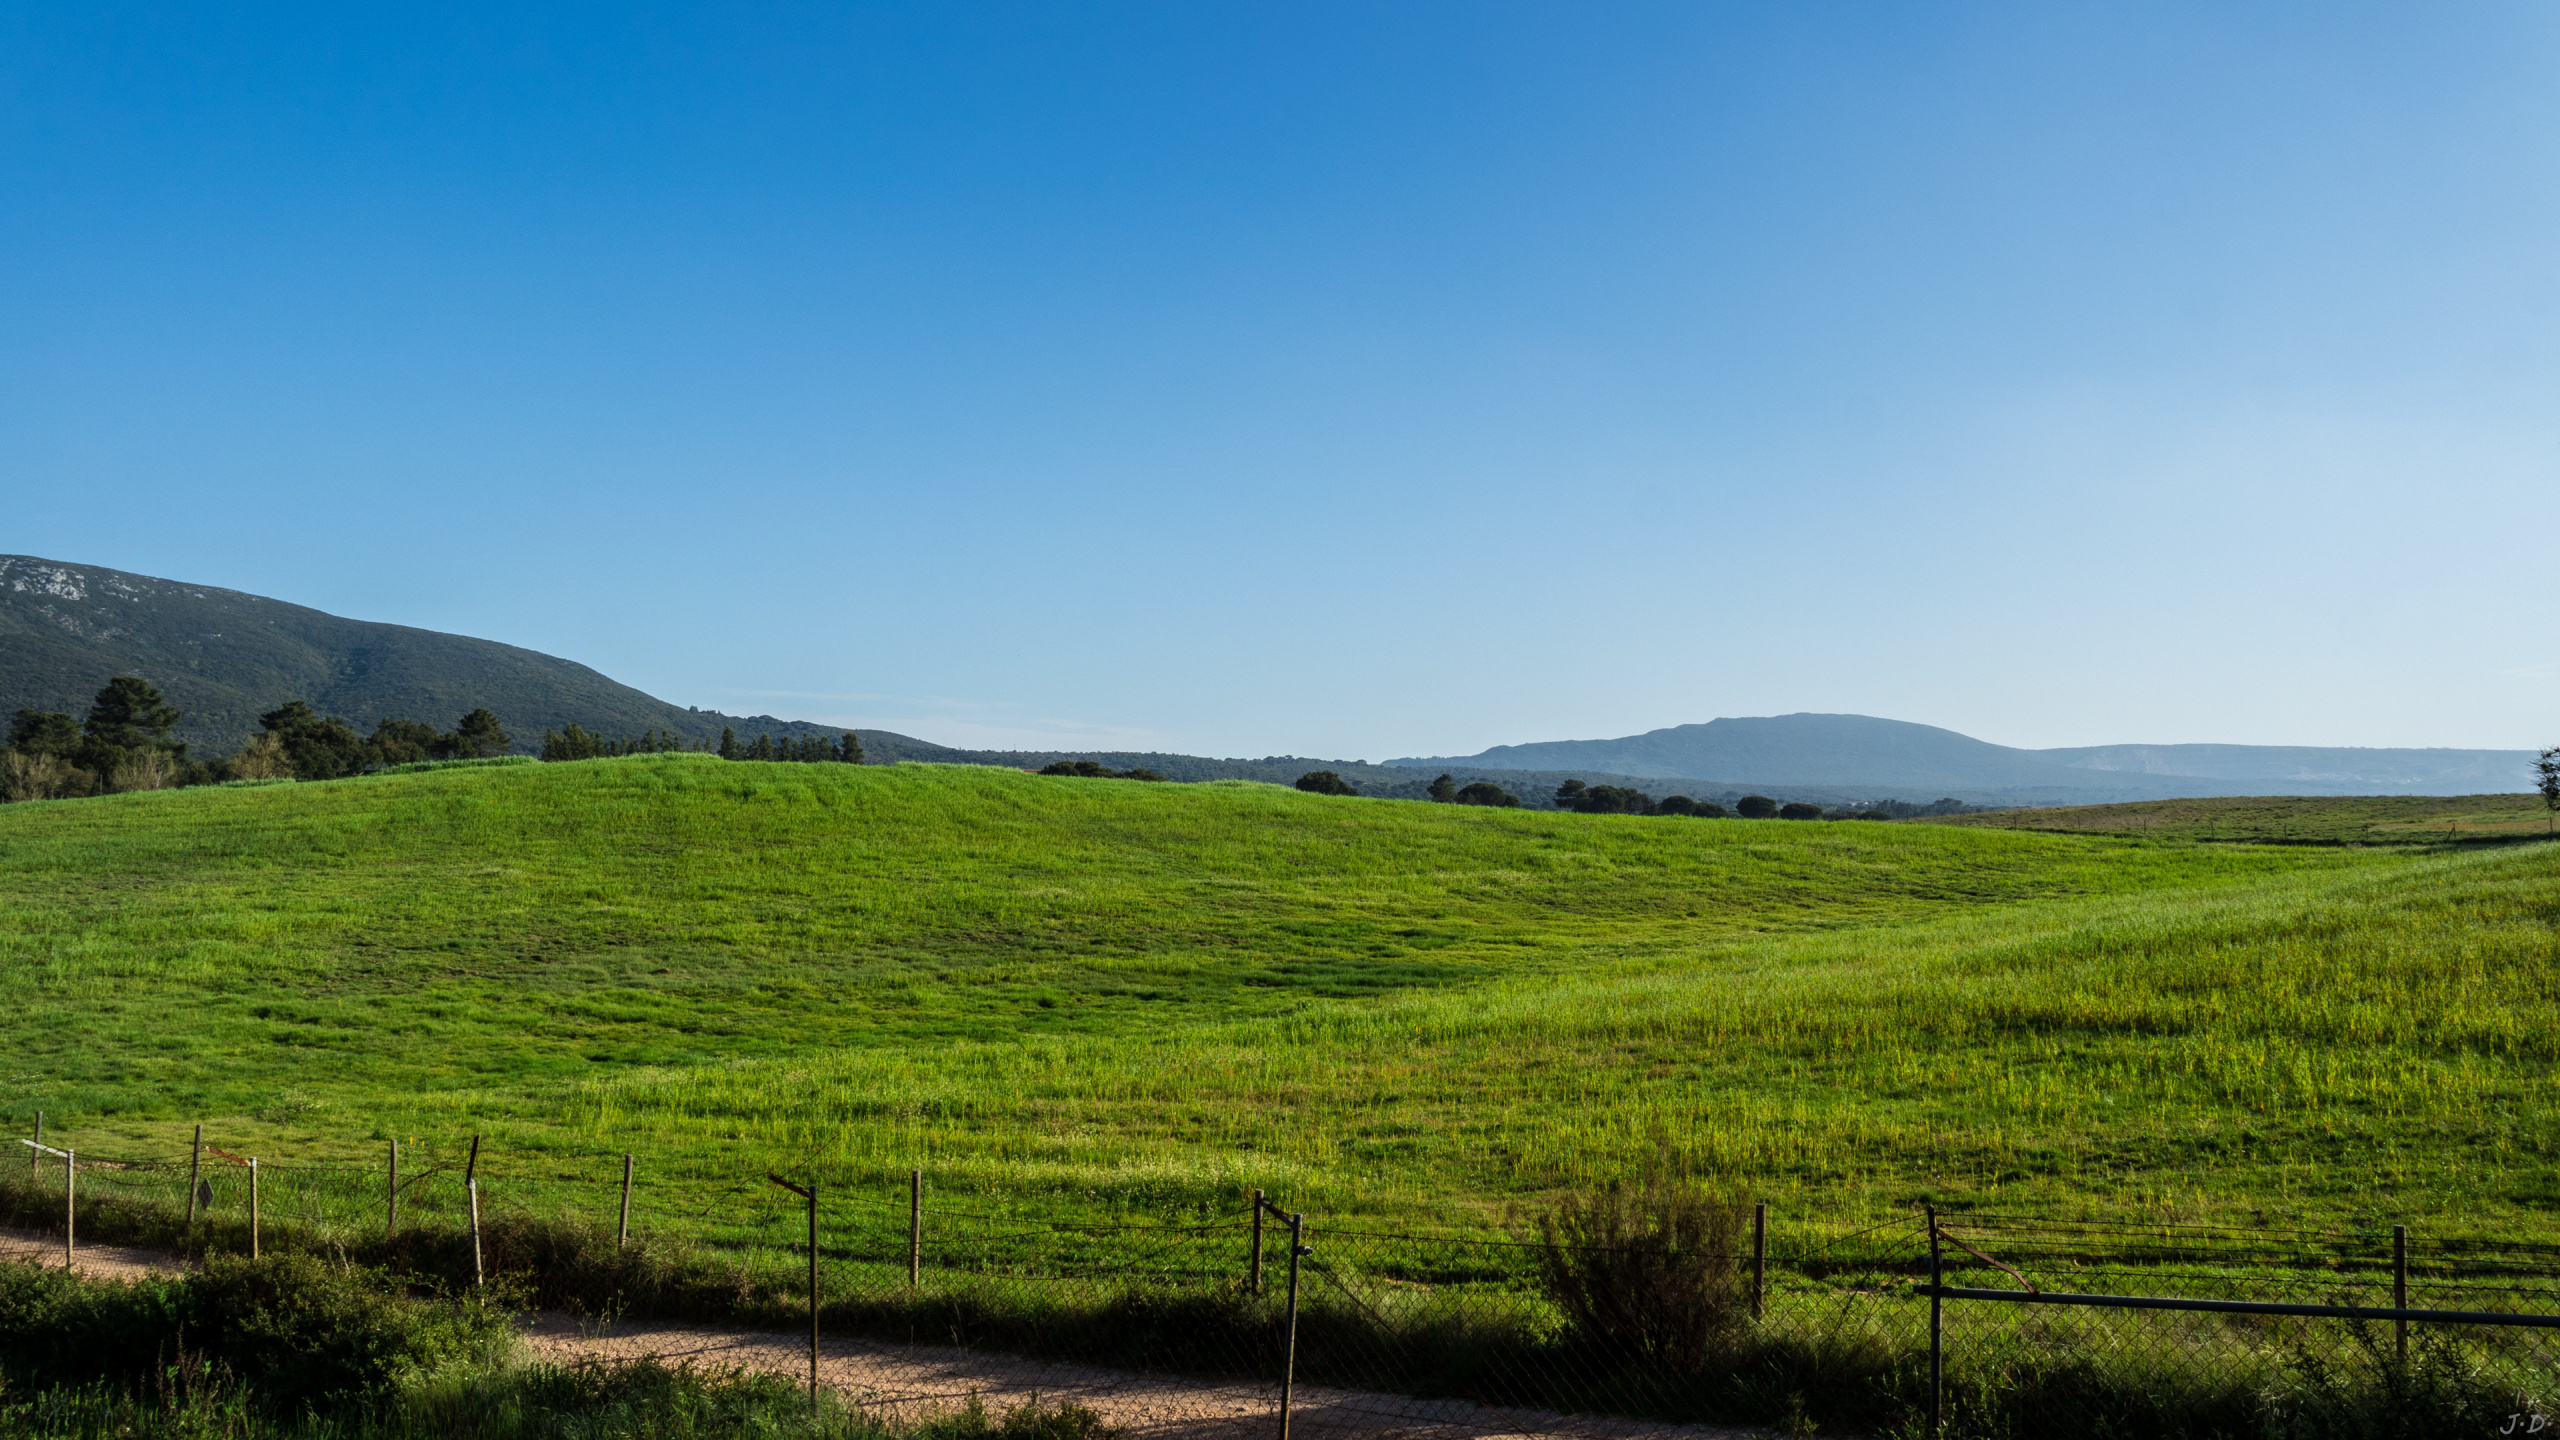 Green Grass Field Under Blue Sky During Daytime. Wallpaper in 2560x1440 Resolution